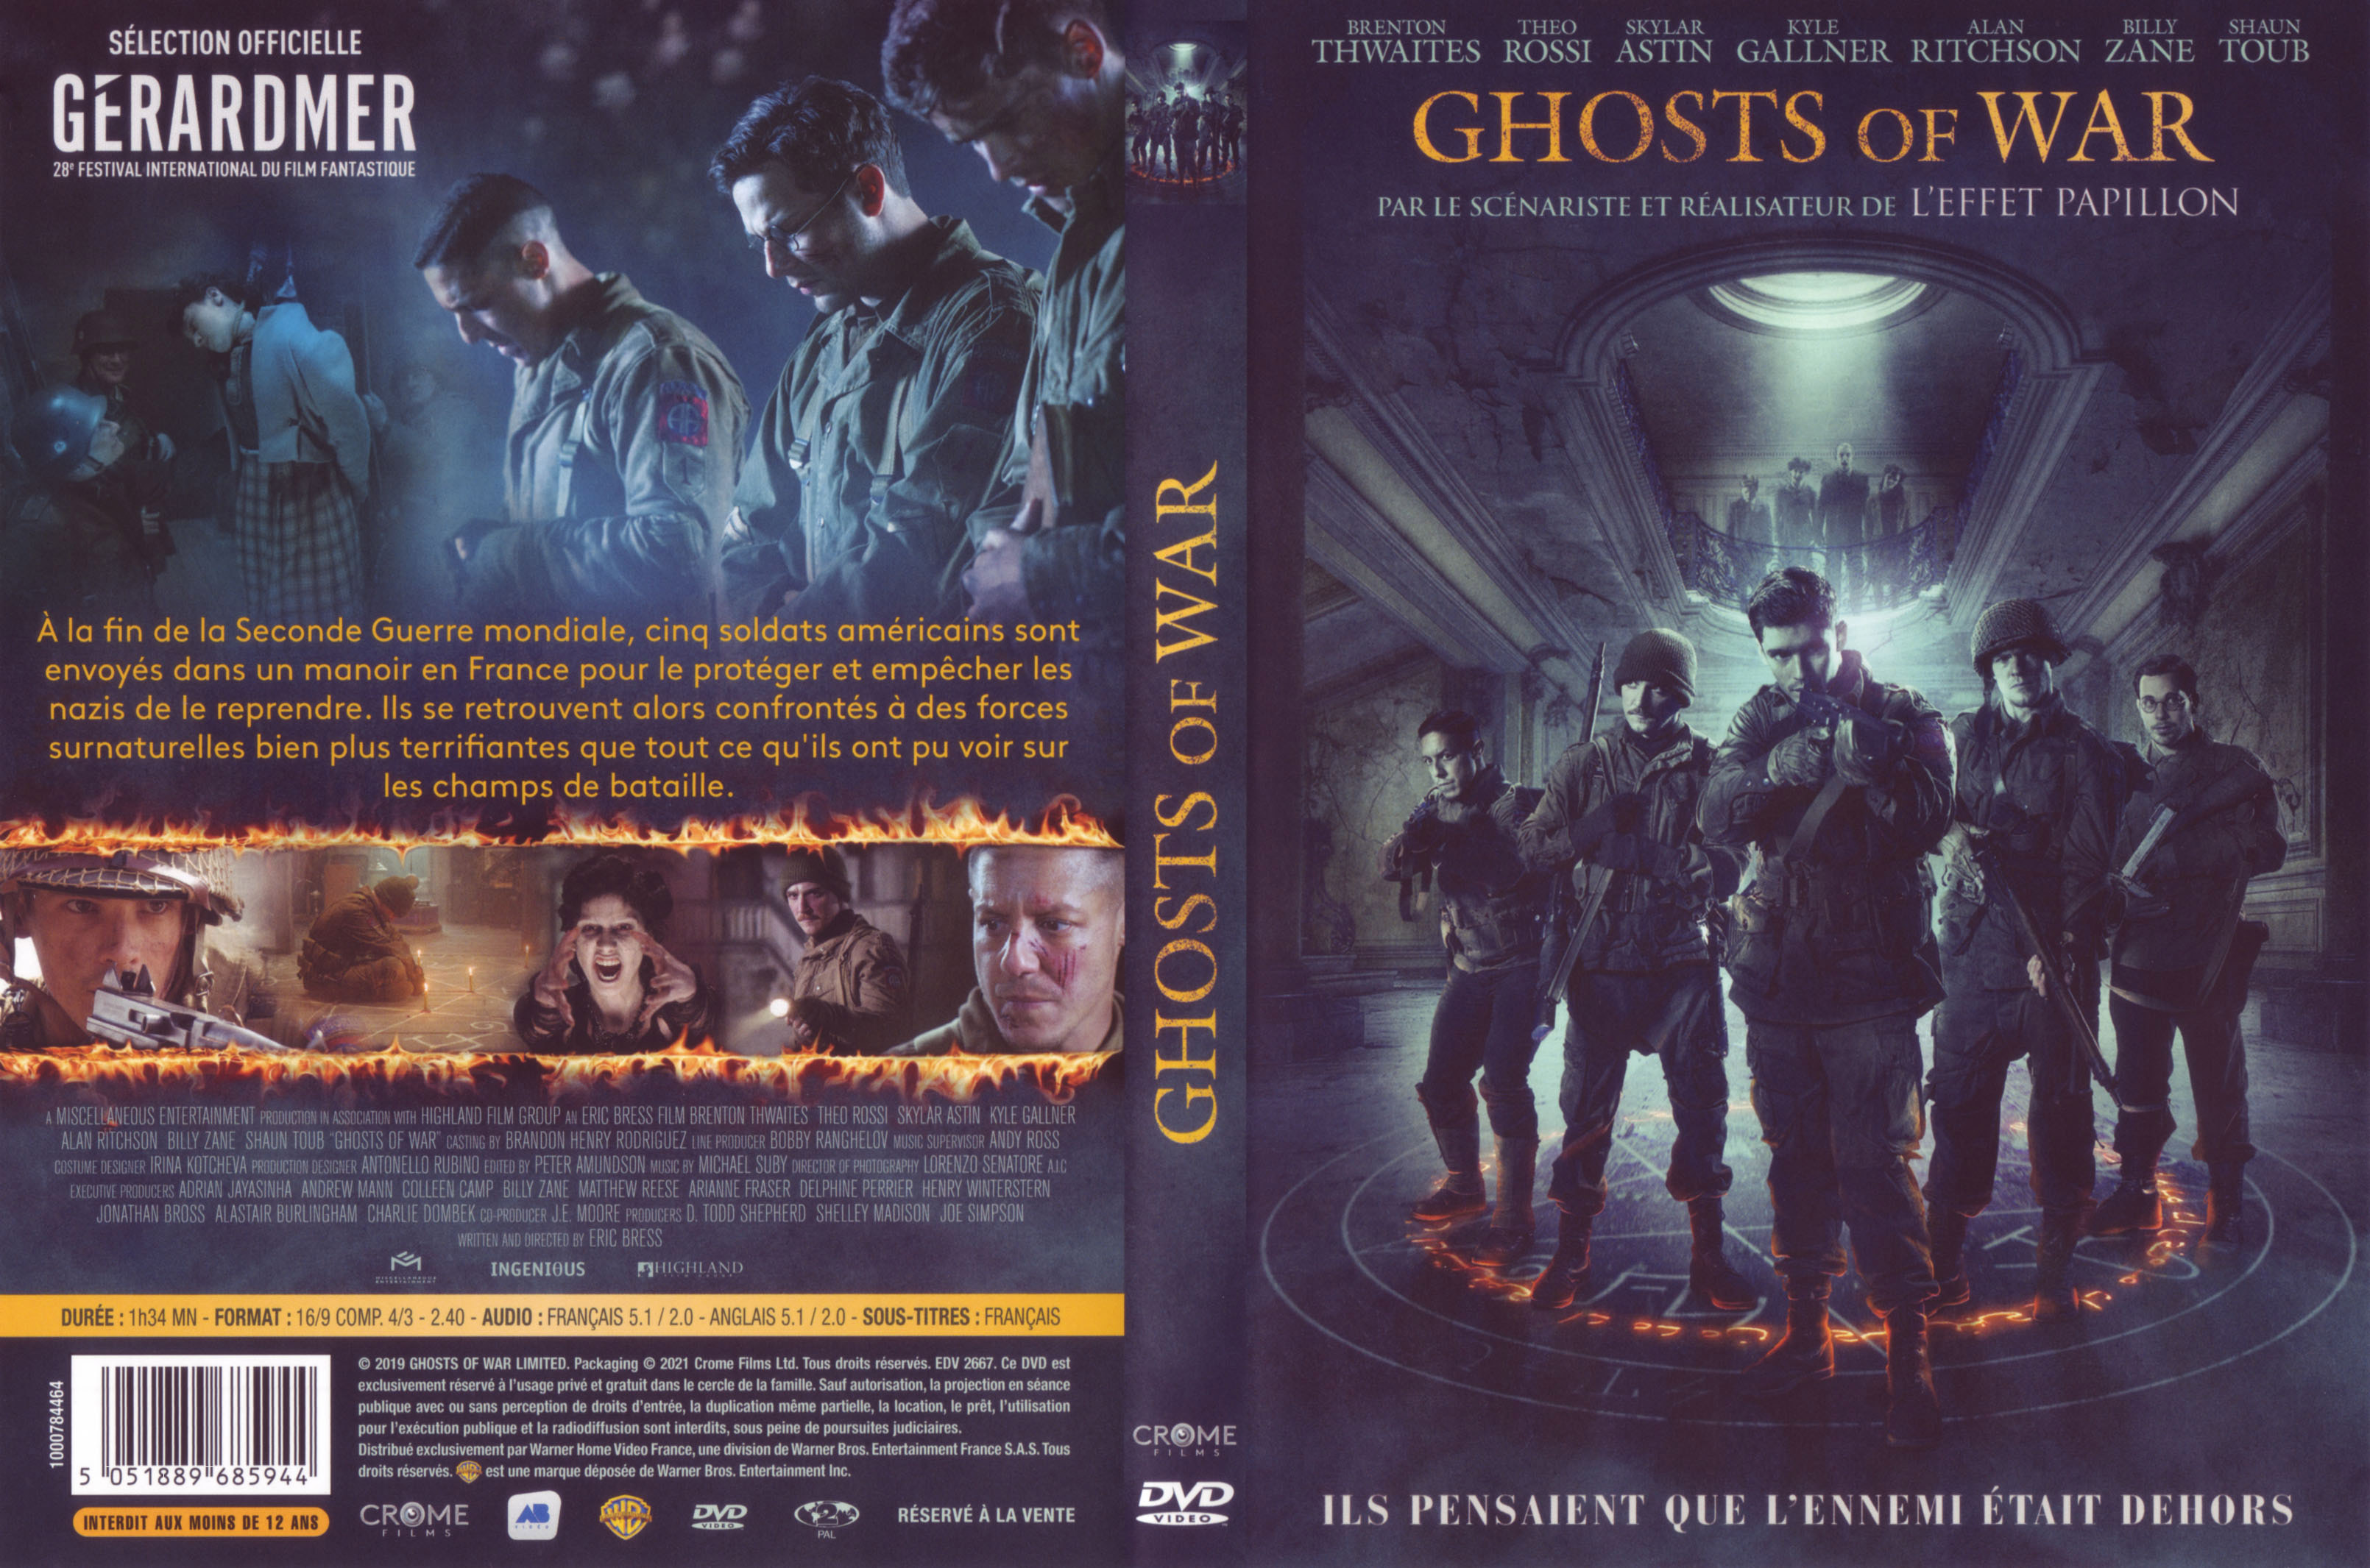 Jaquette DVD Ghosts of war